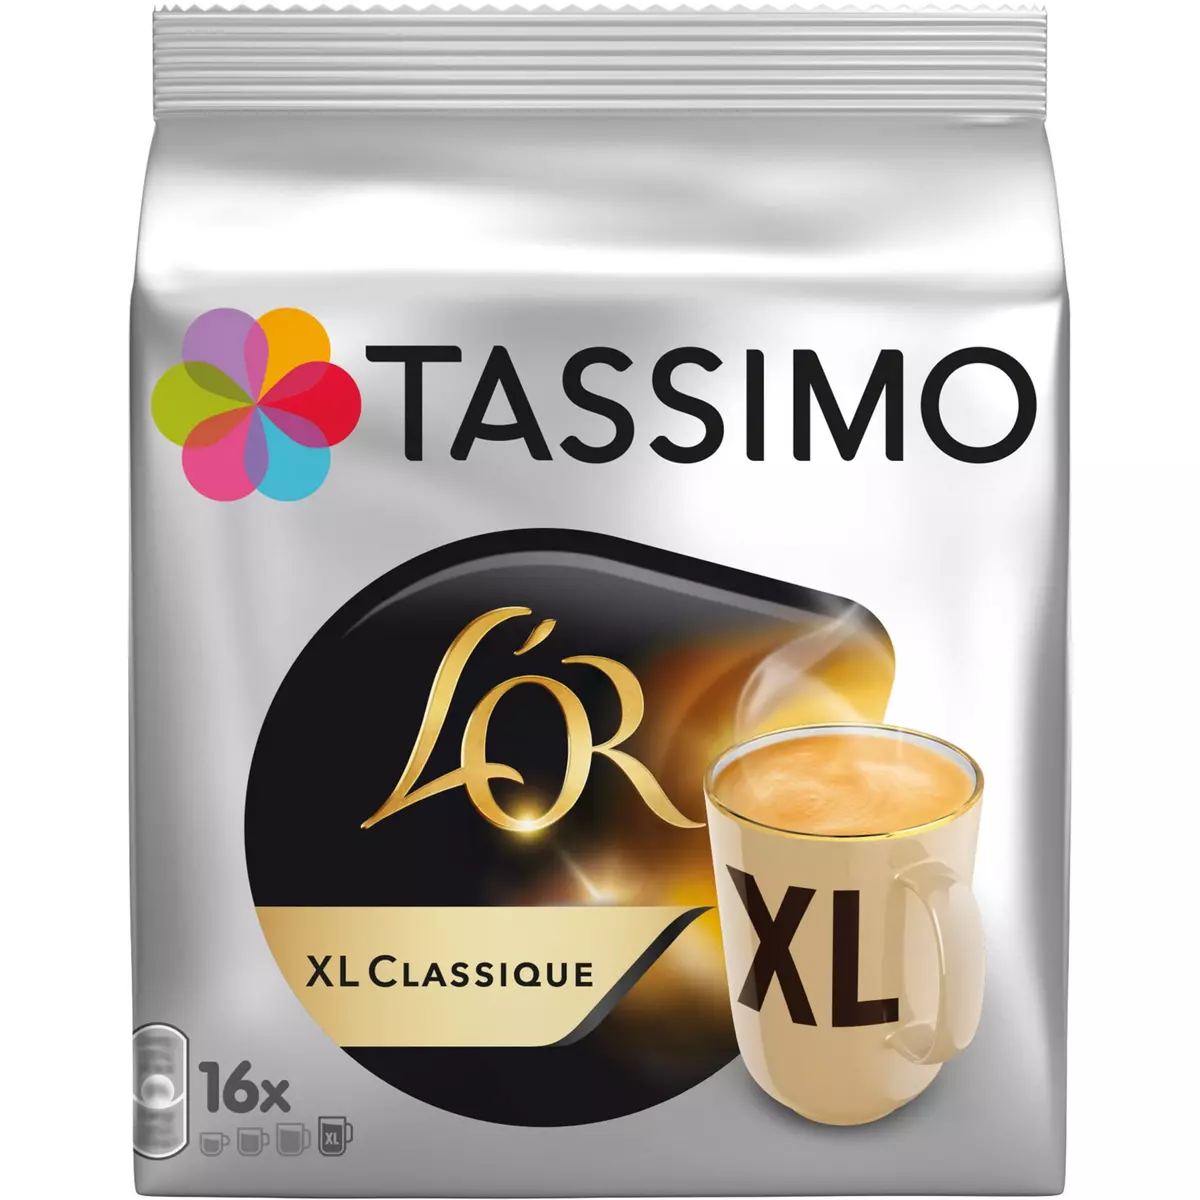 LOT DE 4 - TASSIMO - Grand Mere Café dosettes Espresso - 24 dosettes